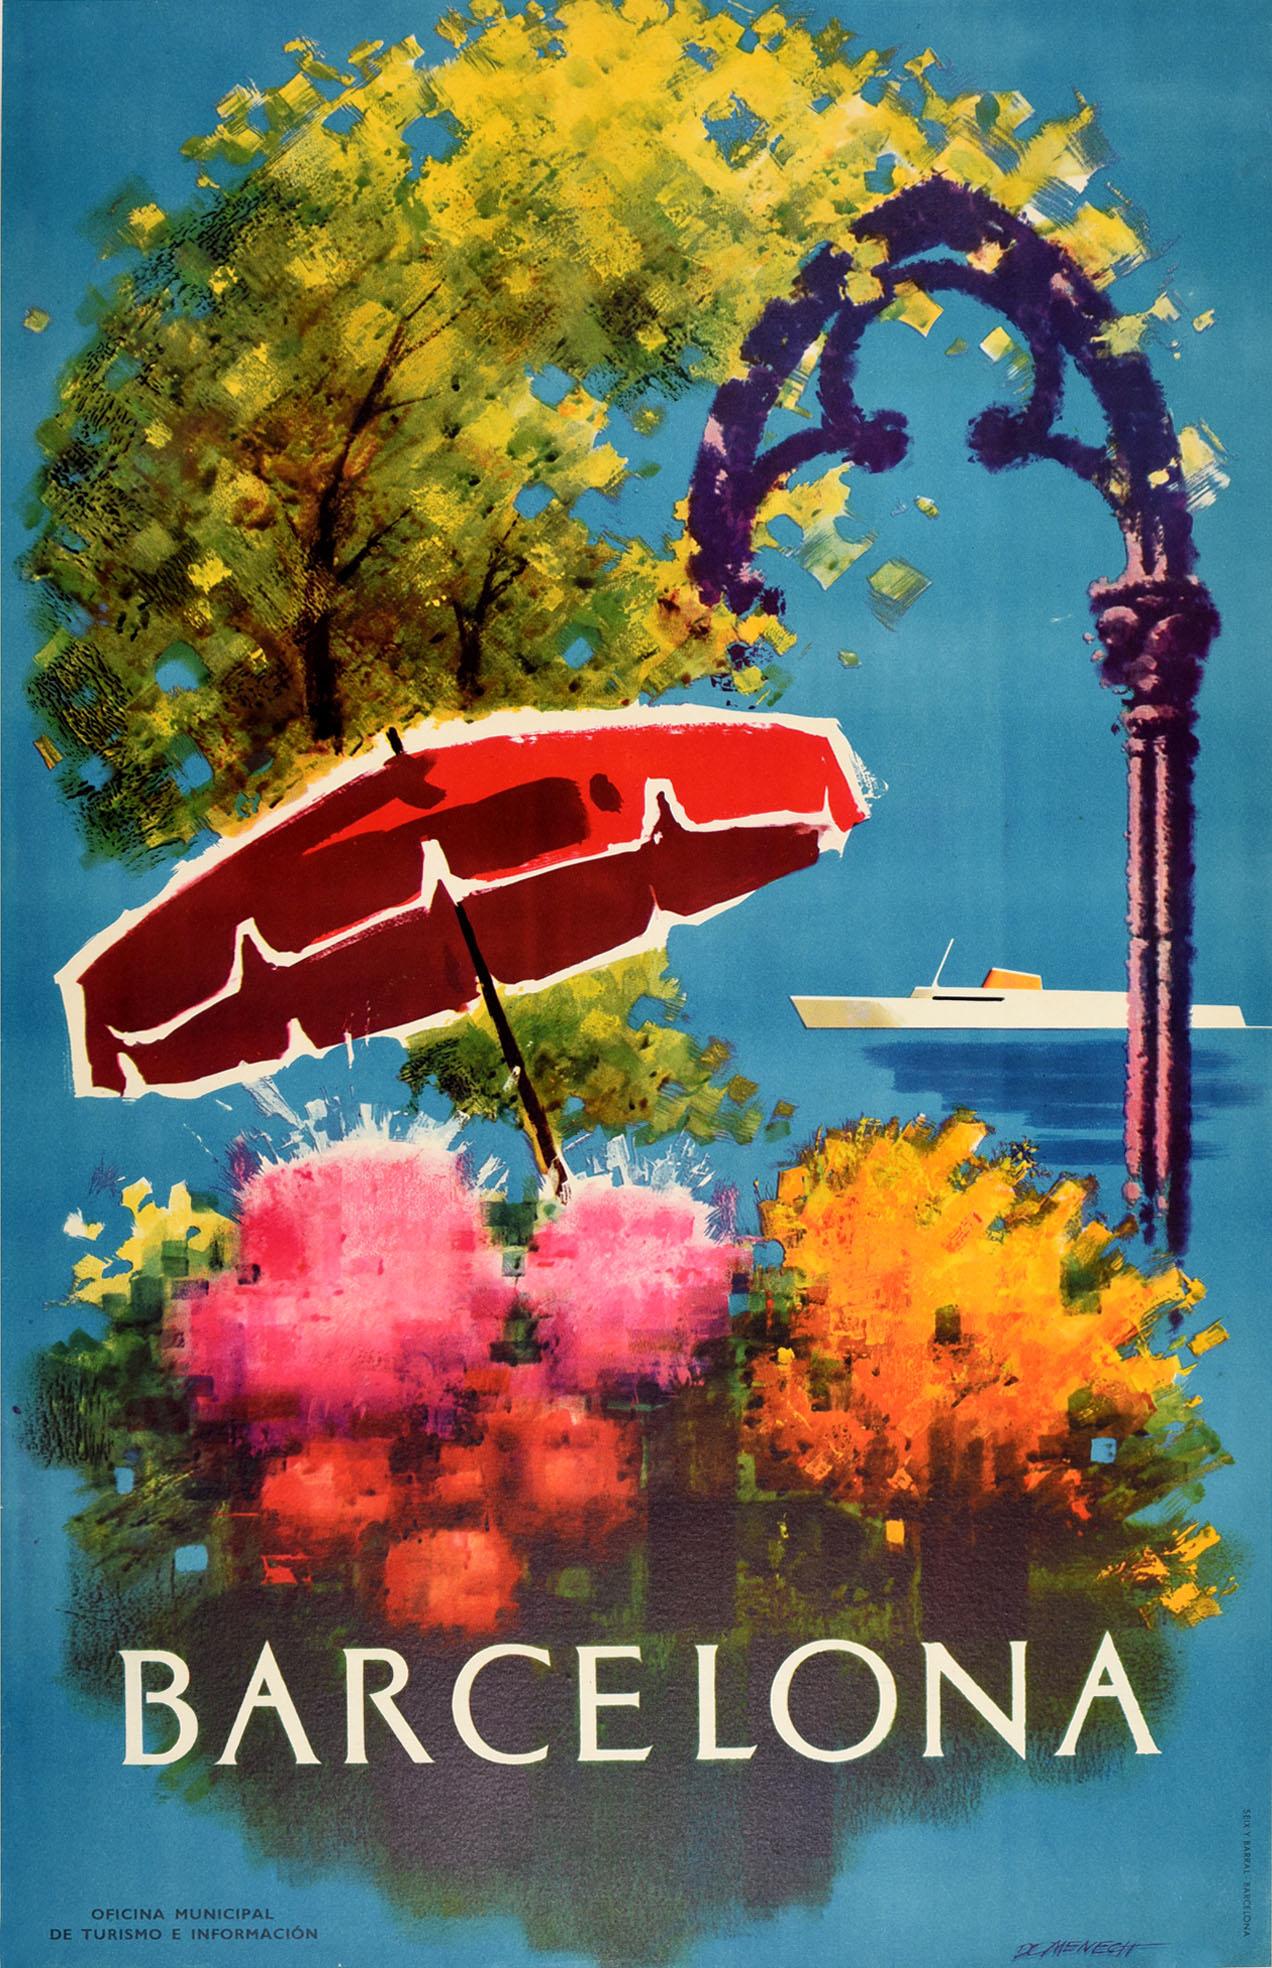 Louis Philippe Lipstick Original Tear Sheet Ideal for Framing